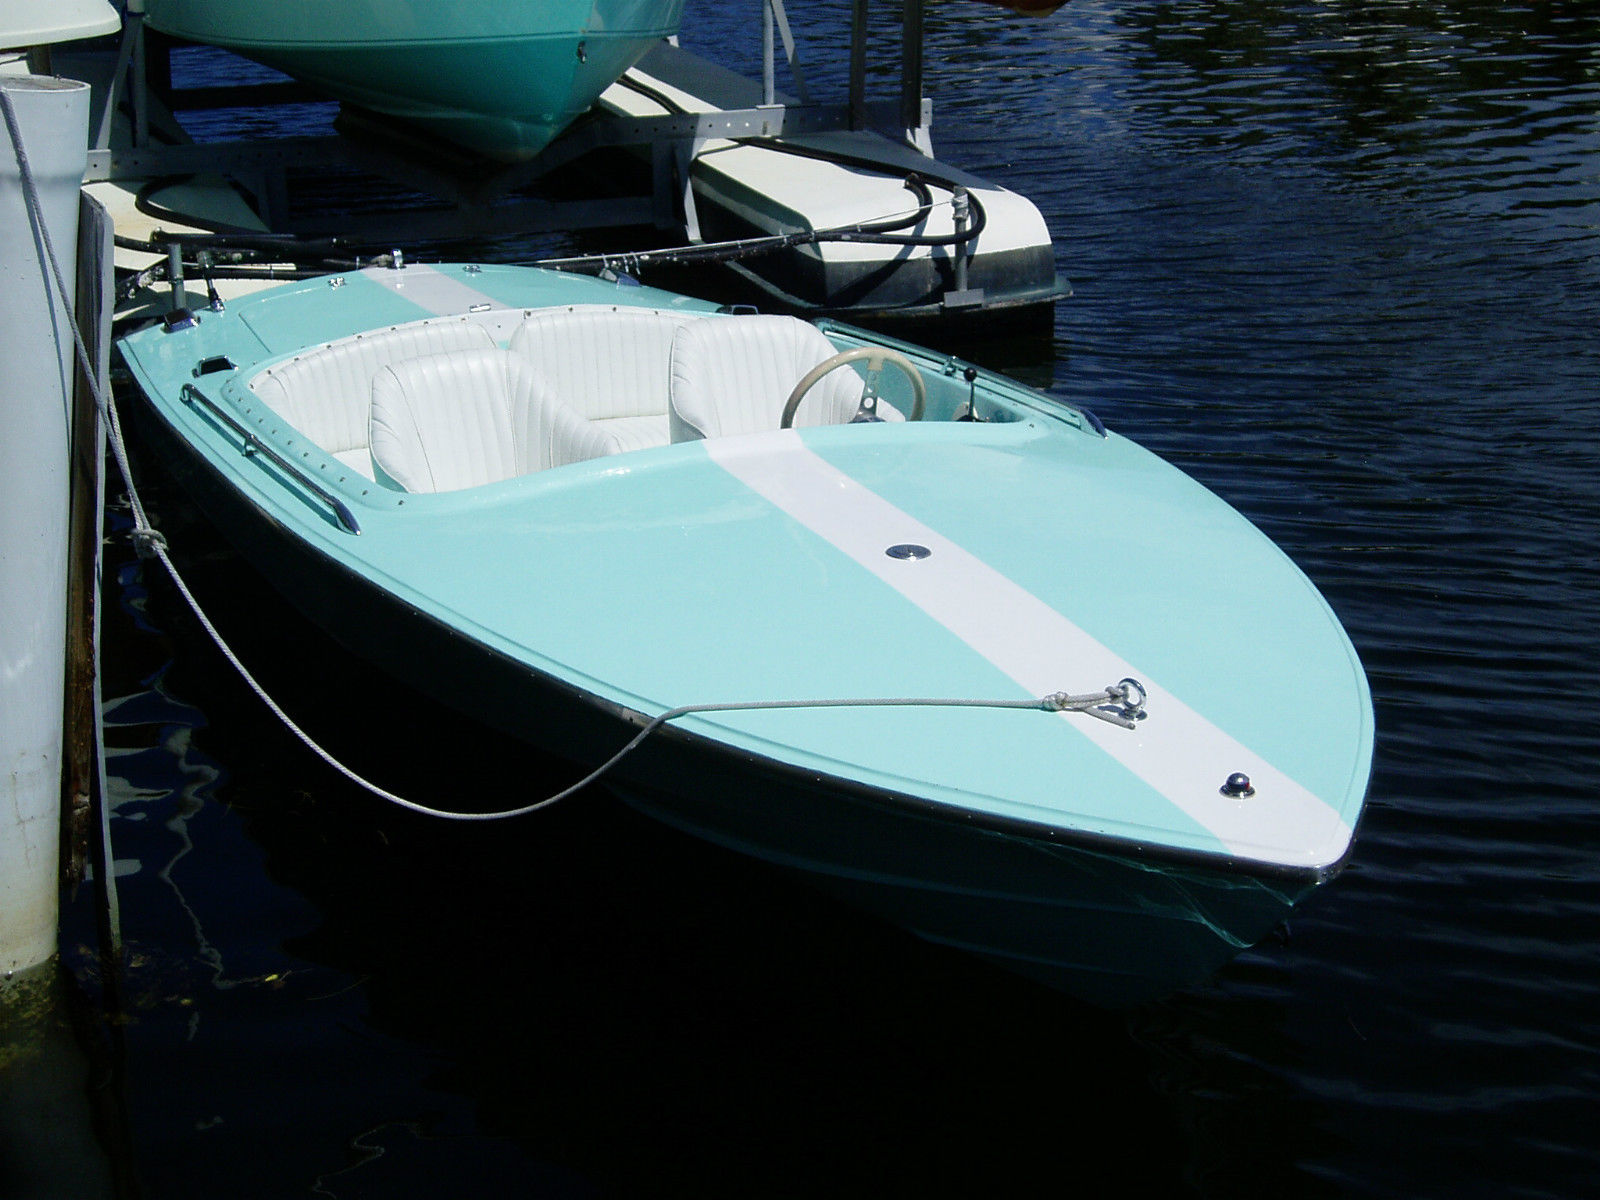 Donzi Classic 18 Boat For Sale - Waa2